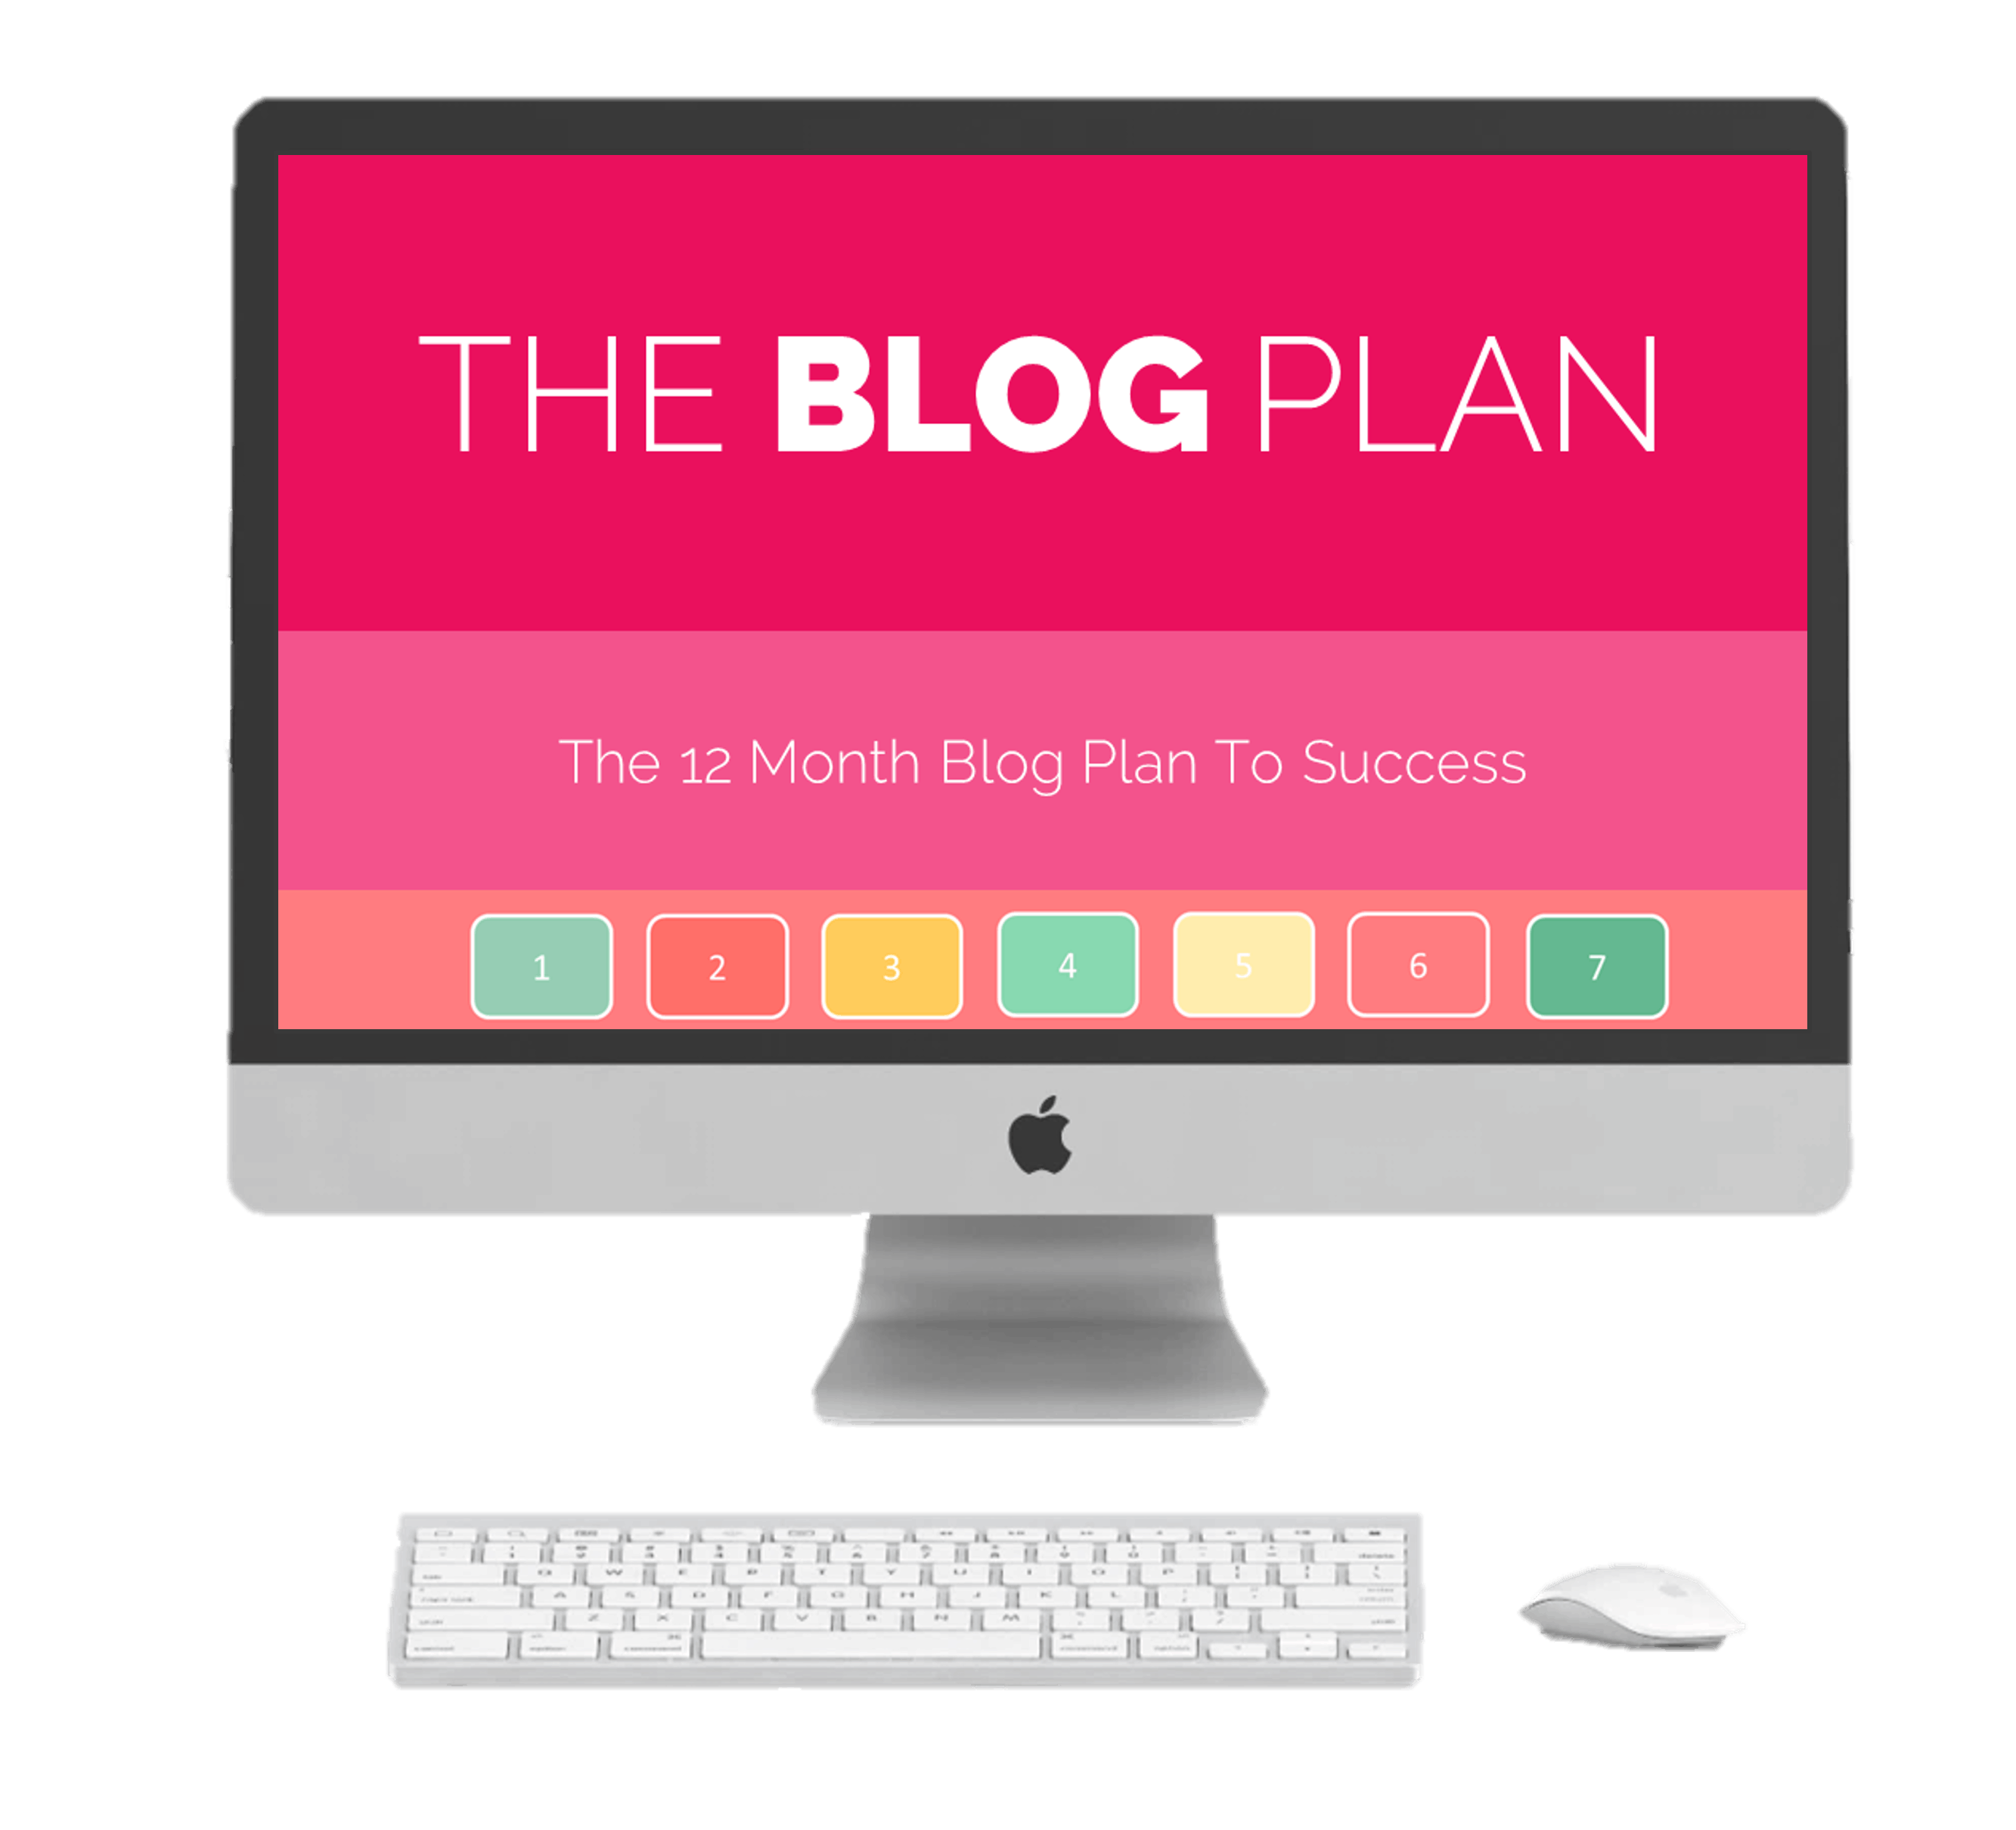 The Blog Plan by Startamomblog